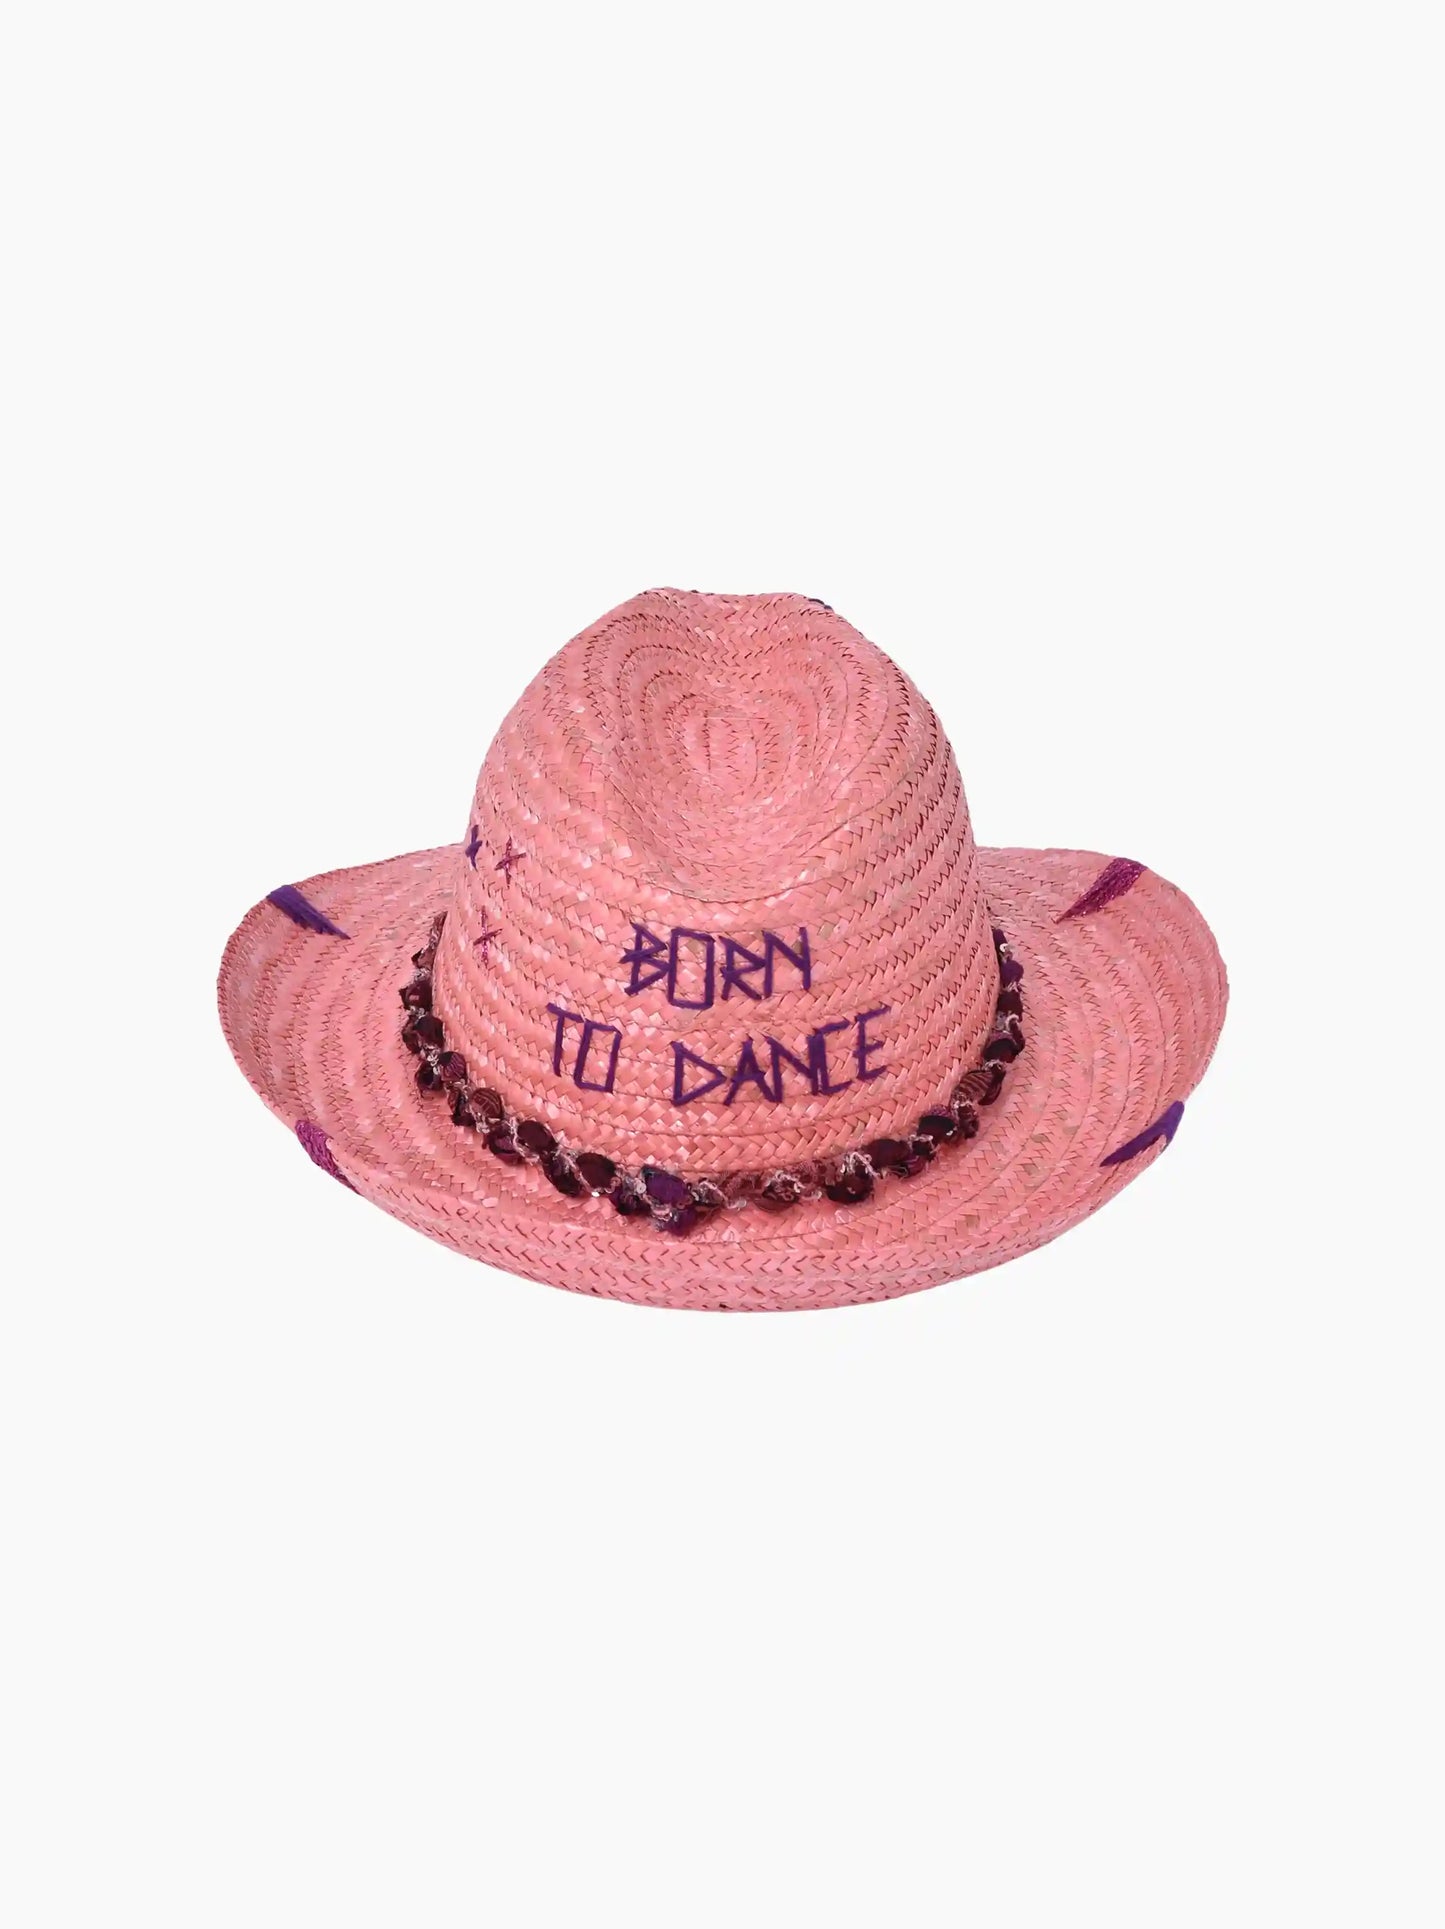 Born To Dance Straw Hat